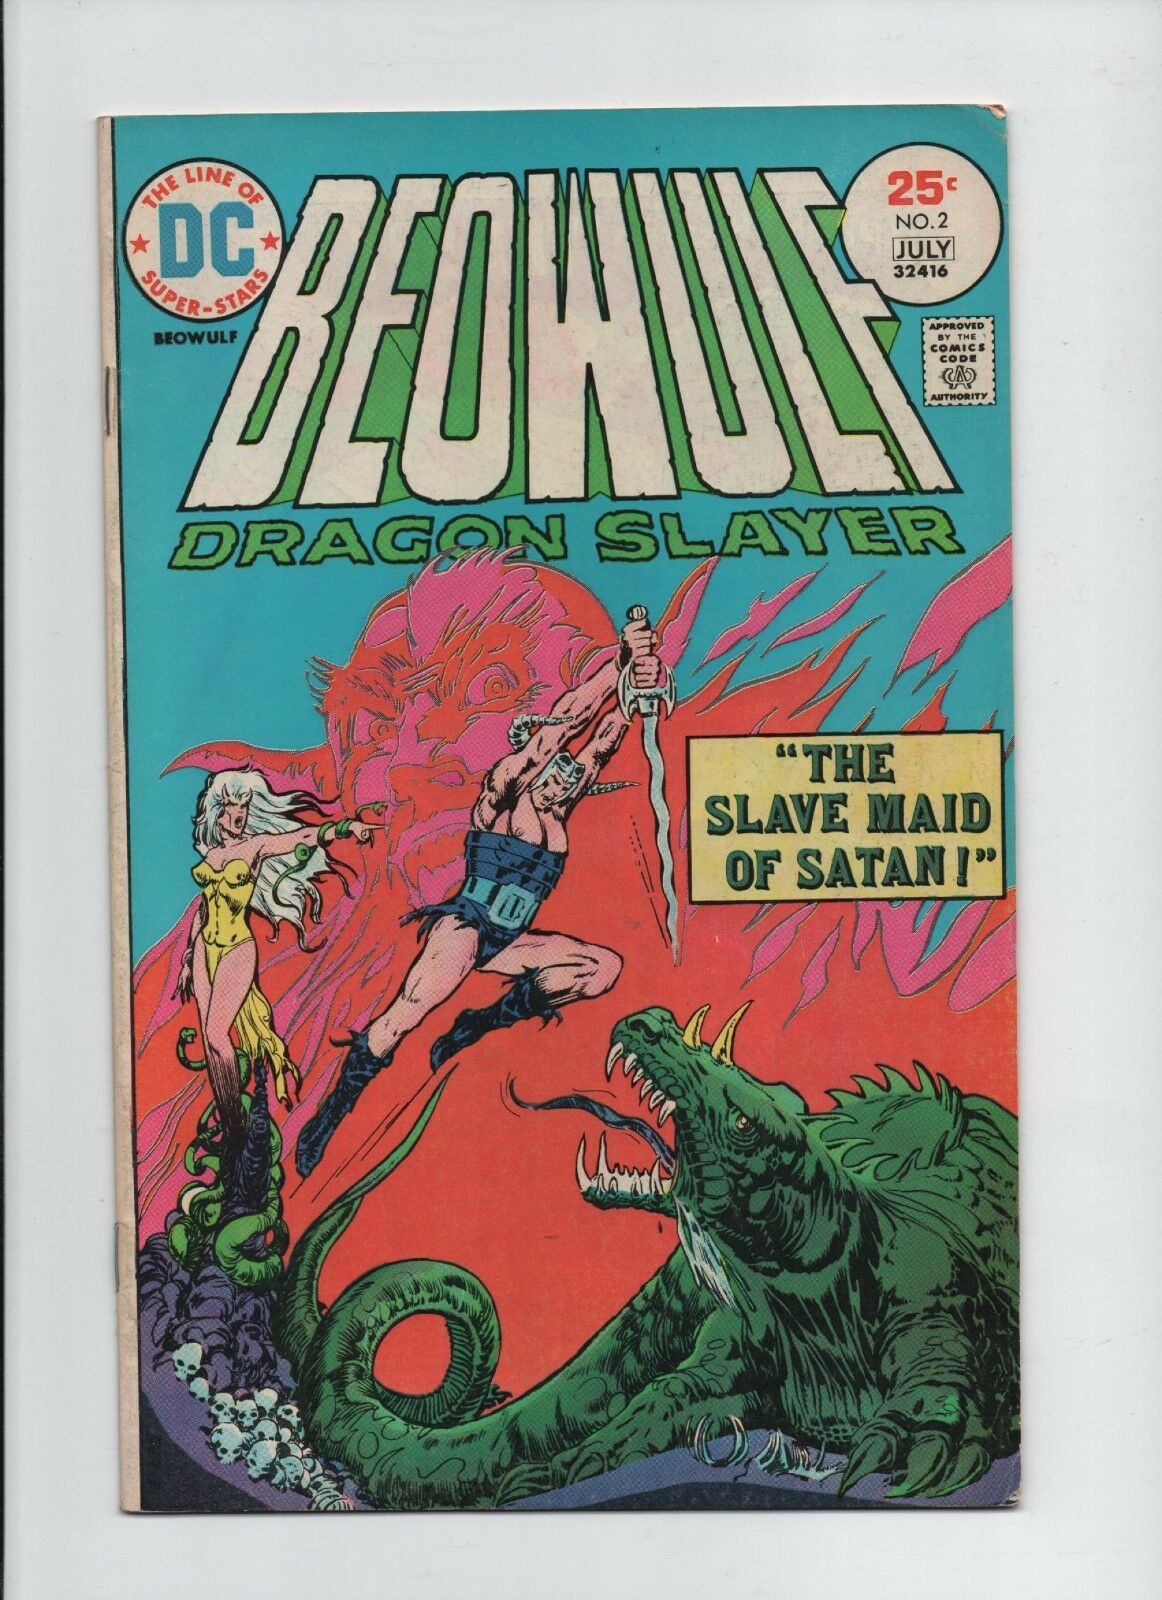 Beowulf: Dragon Slayer  #2 - July 1975 - DC Comics - The Slave Maid of Satan. - $1.37